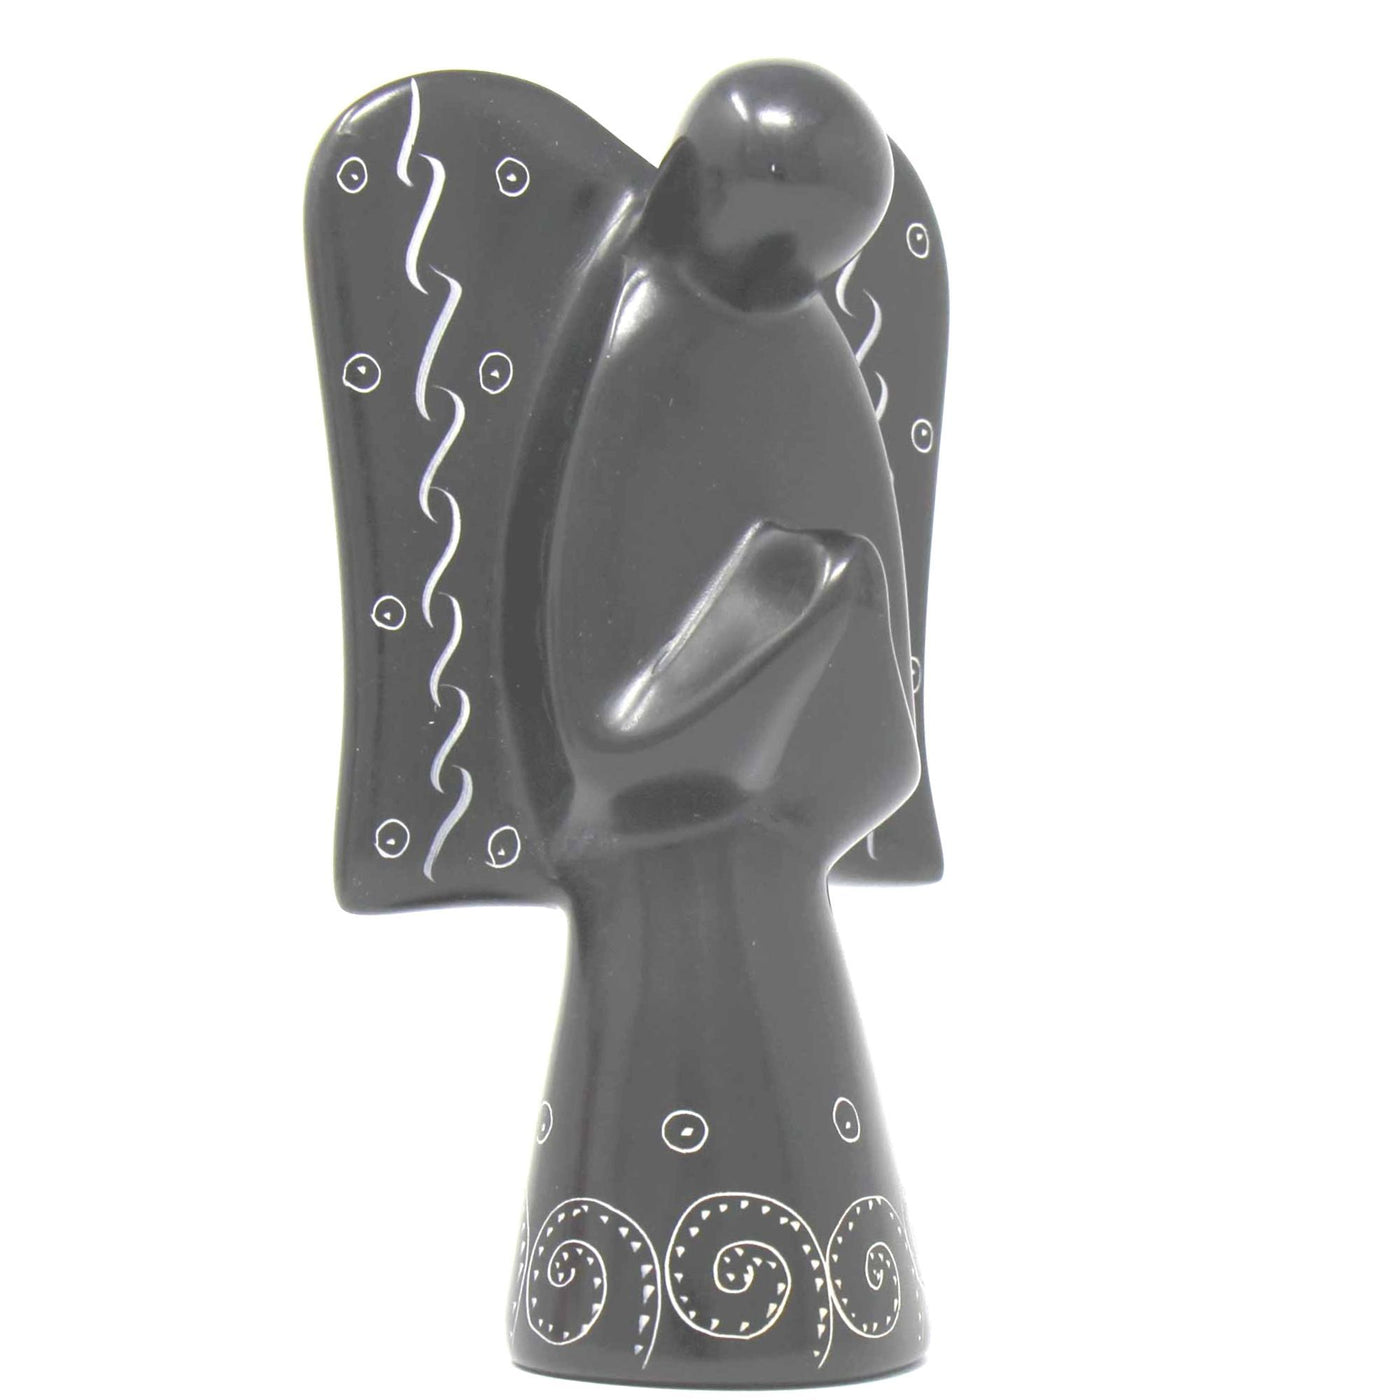 Soapstone Angel Sculpture - Black Finish Design